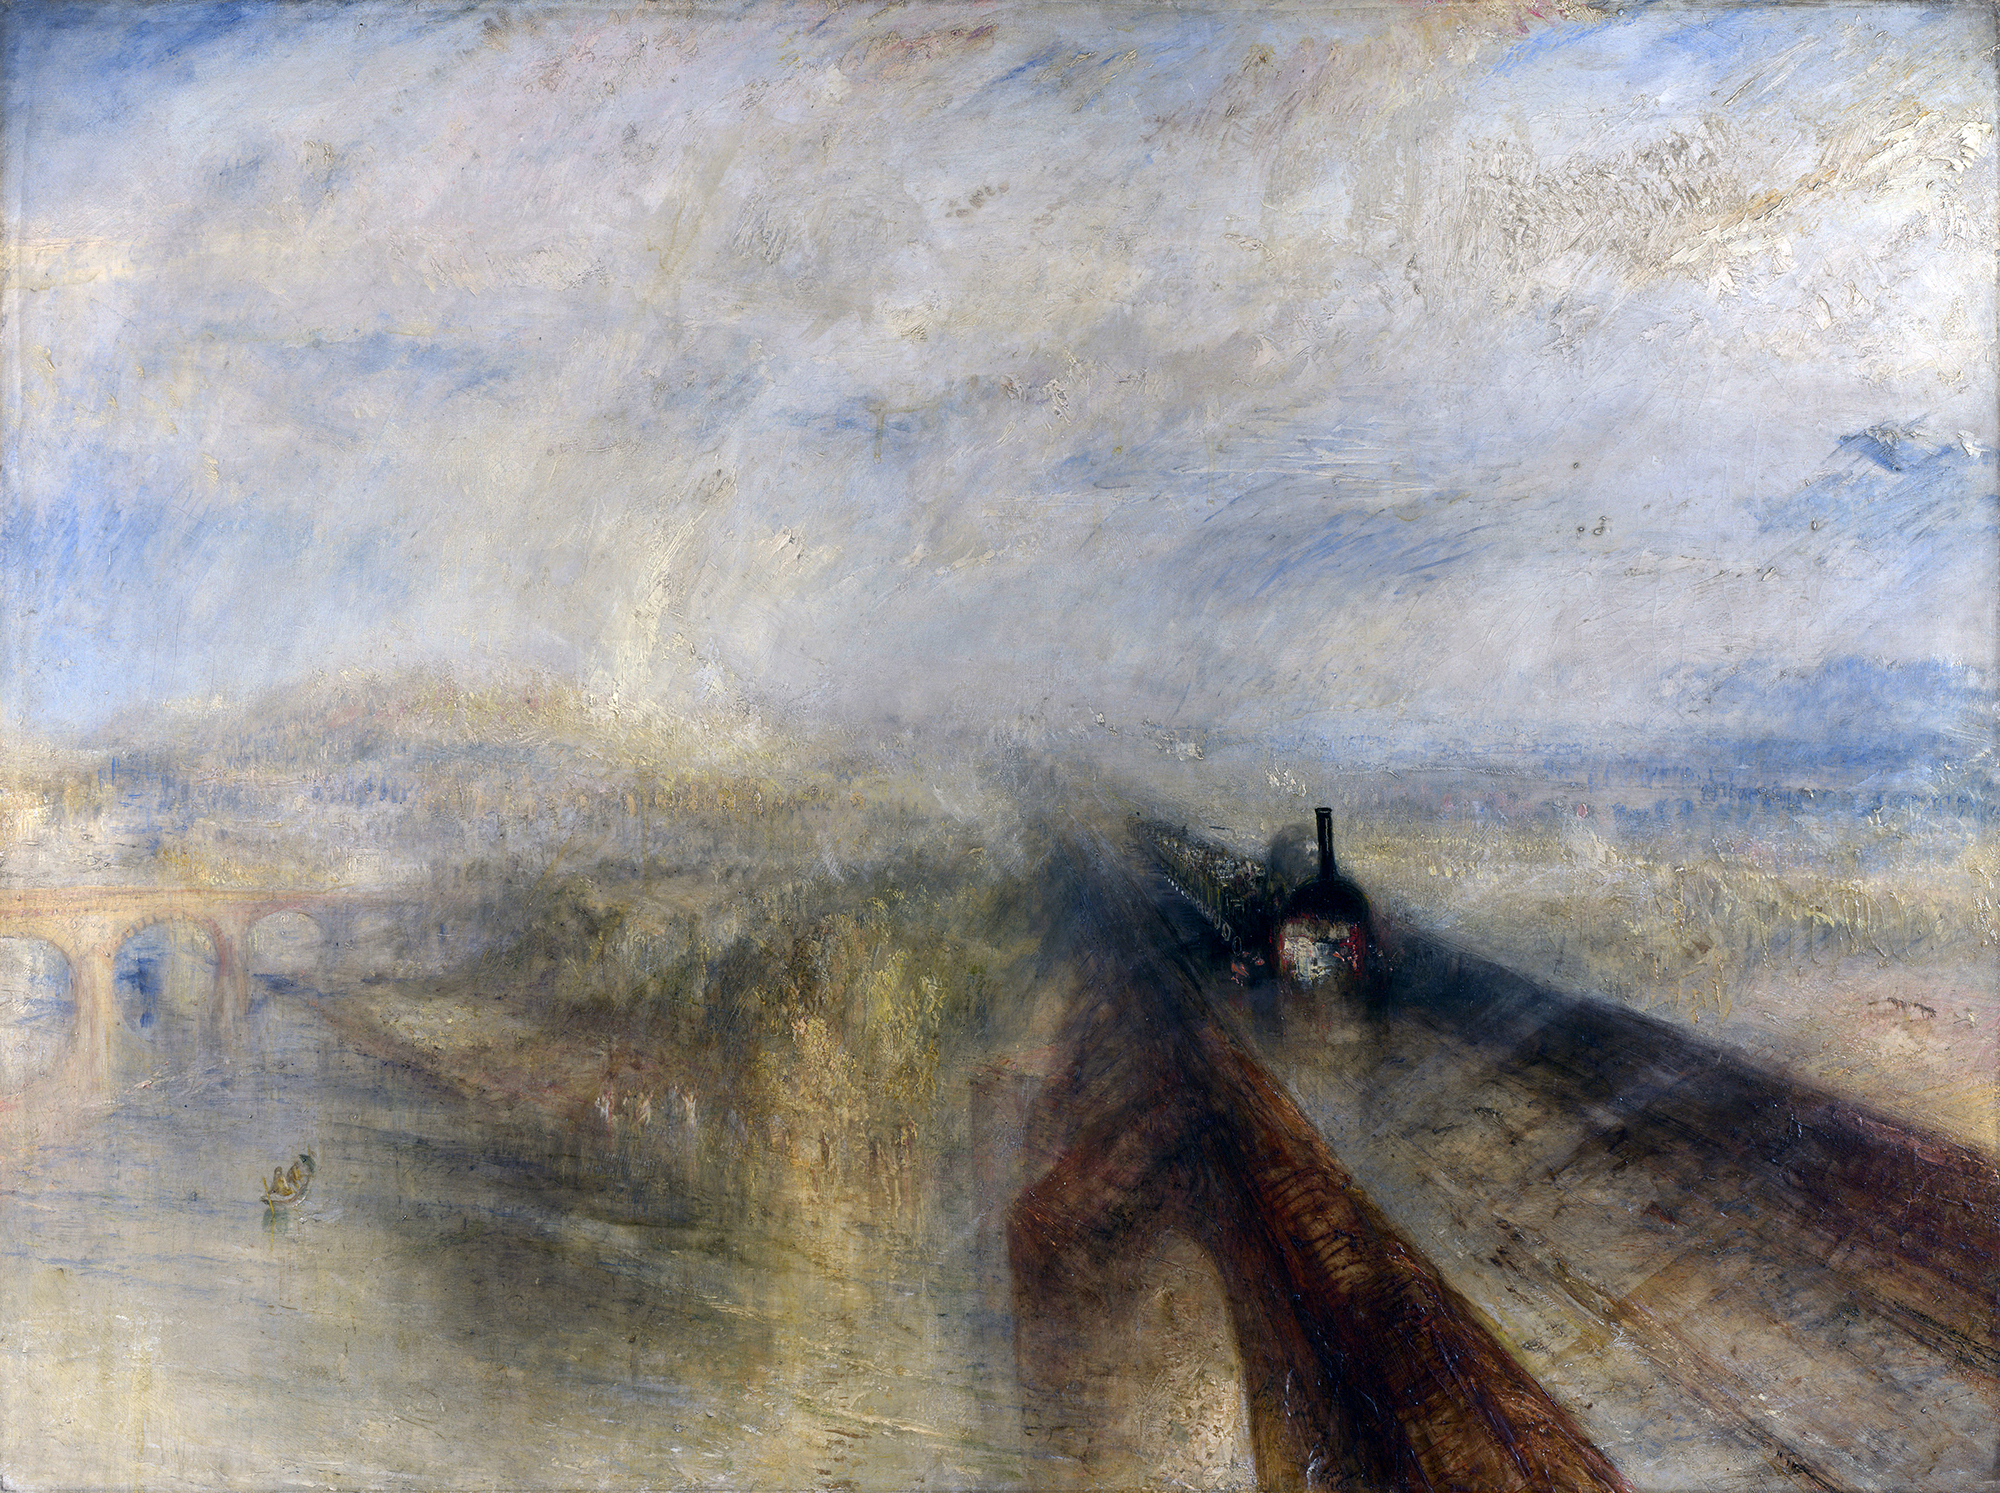 J. M. W. Turner, Rain Steam and Speed the great western railway, 1844